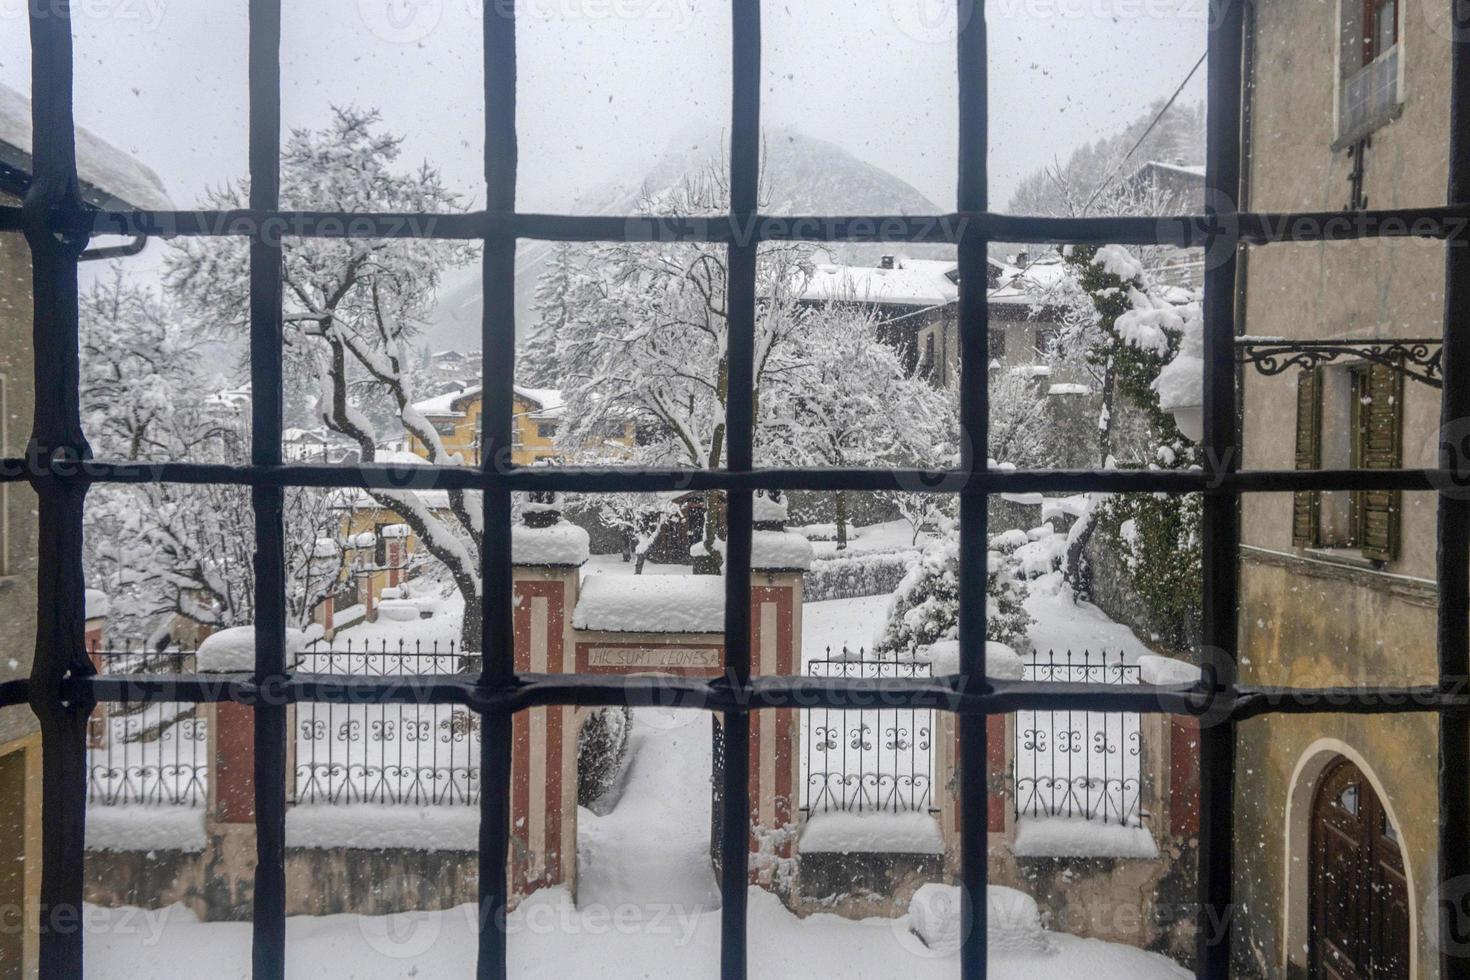 bormio vila medieval valtellina itália sob a neve no inverno foto